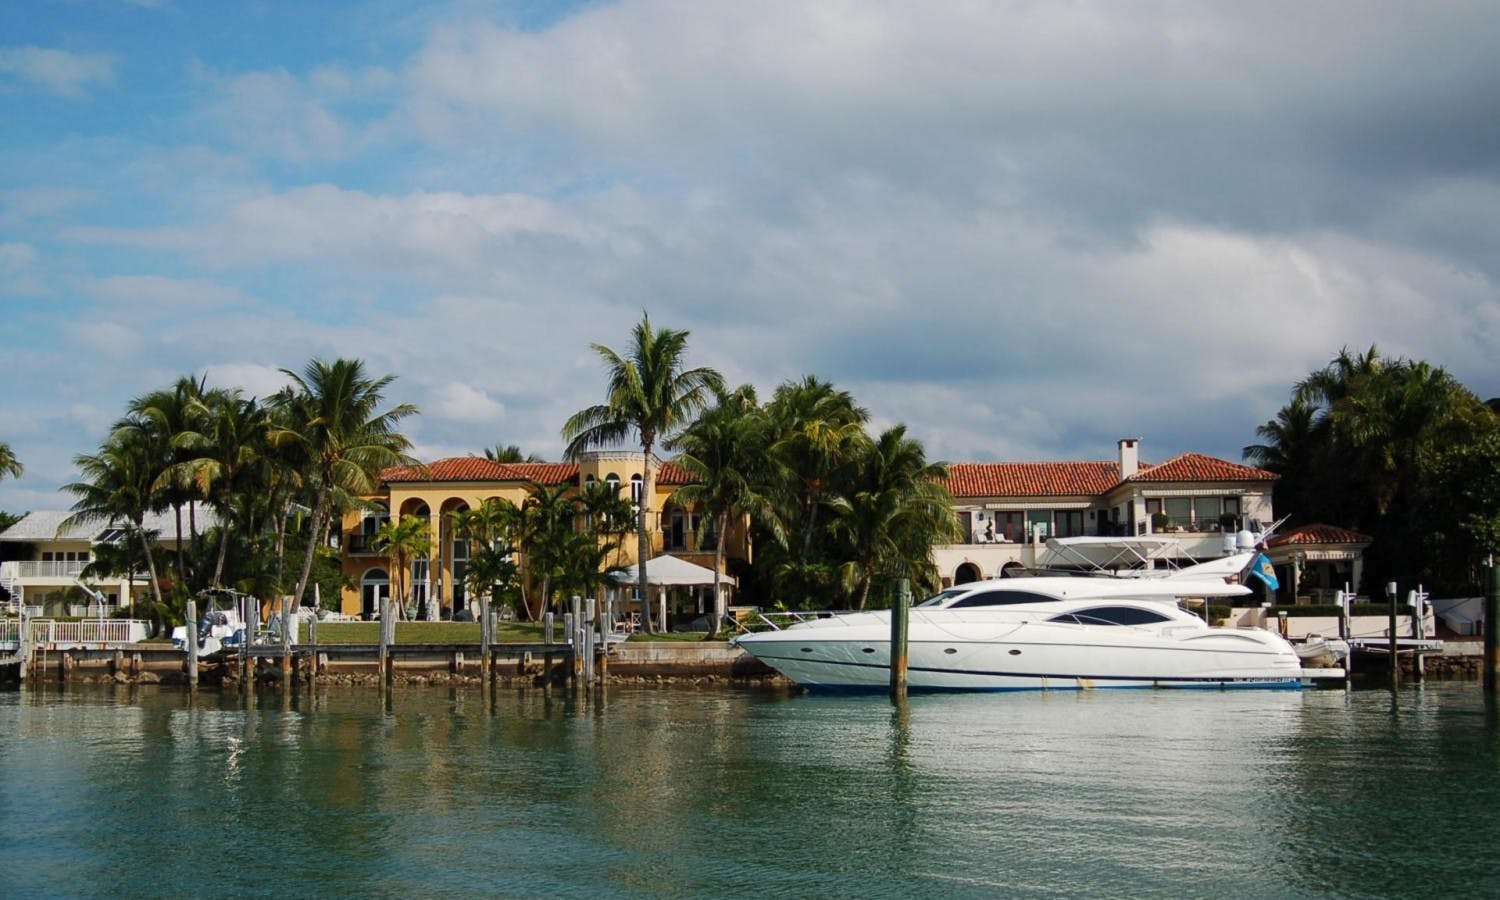 miami - biscayne bay - boat tour - celebrity home - yacht.jpg